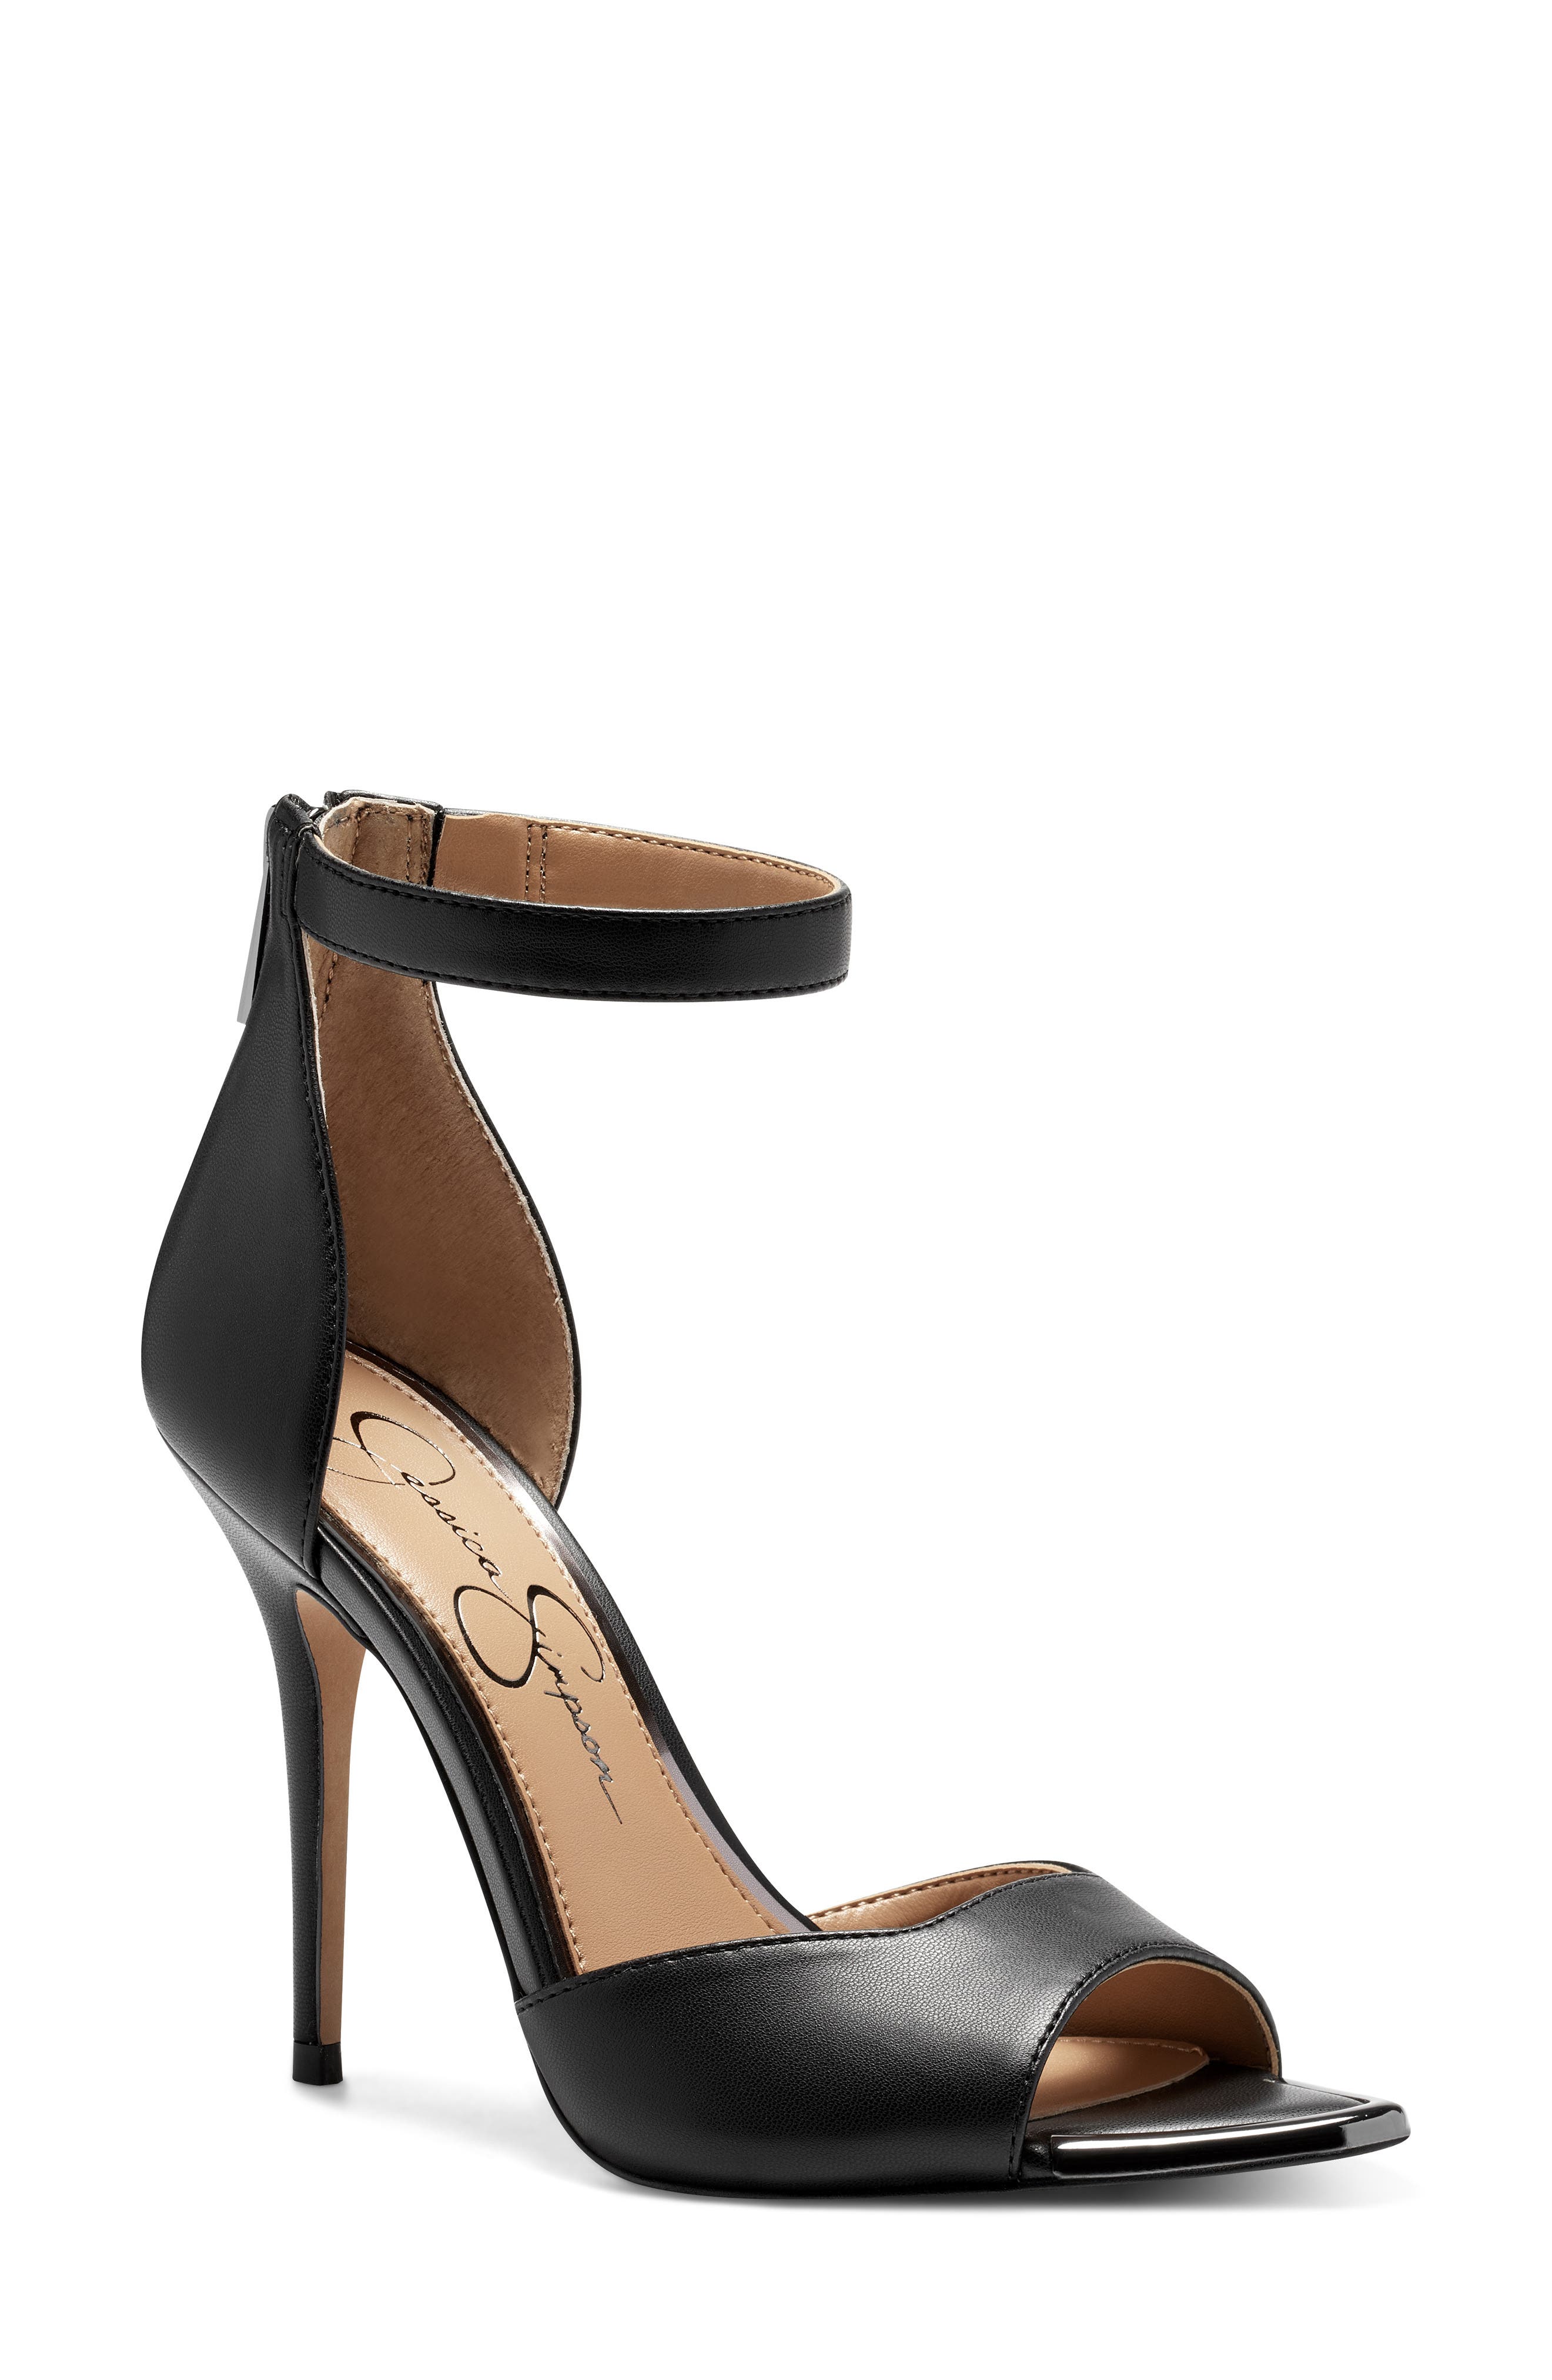 jessica simpson black heels